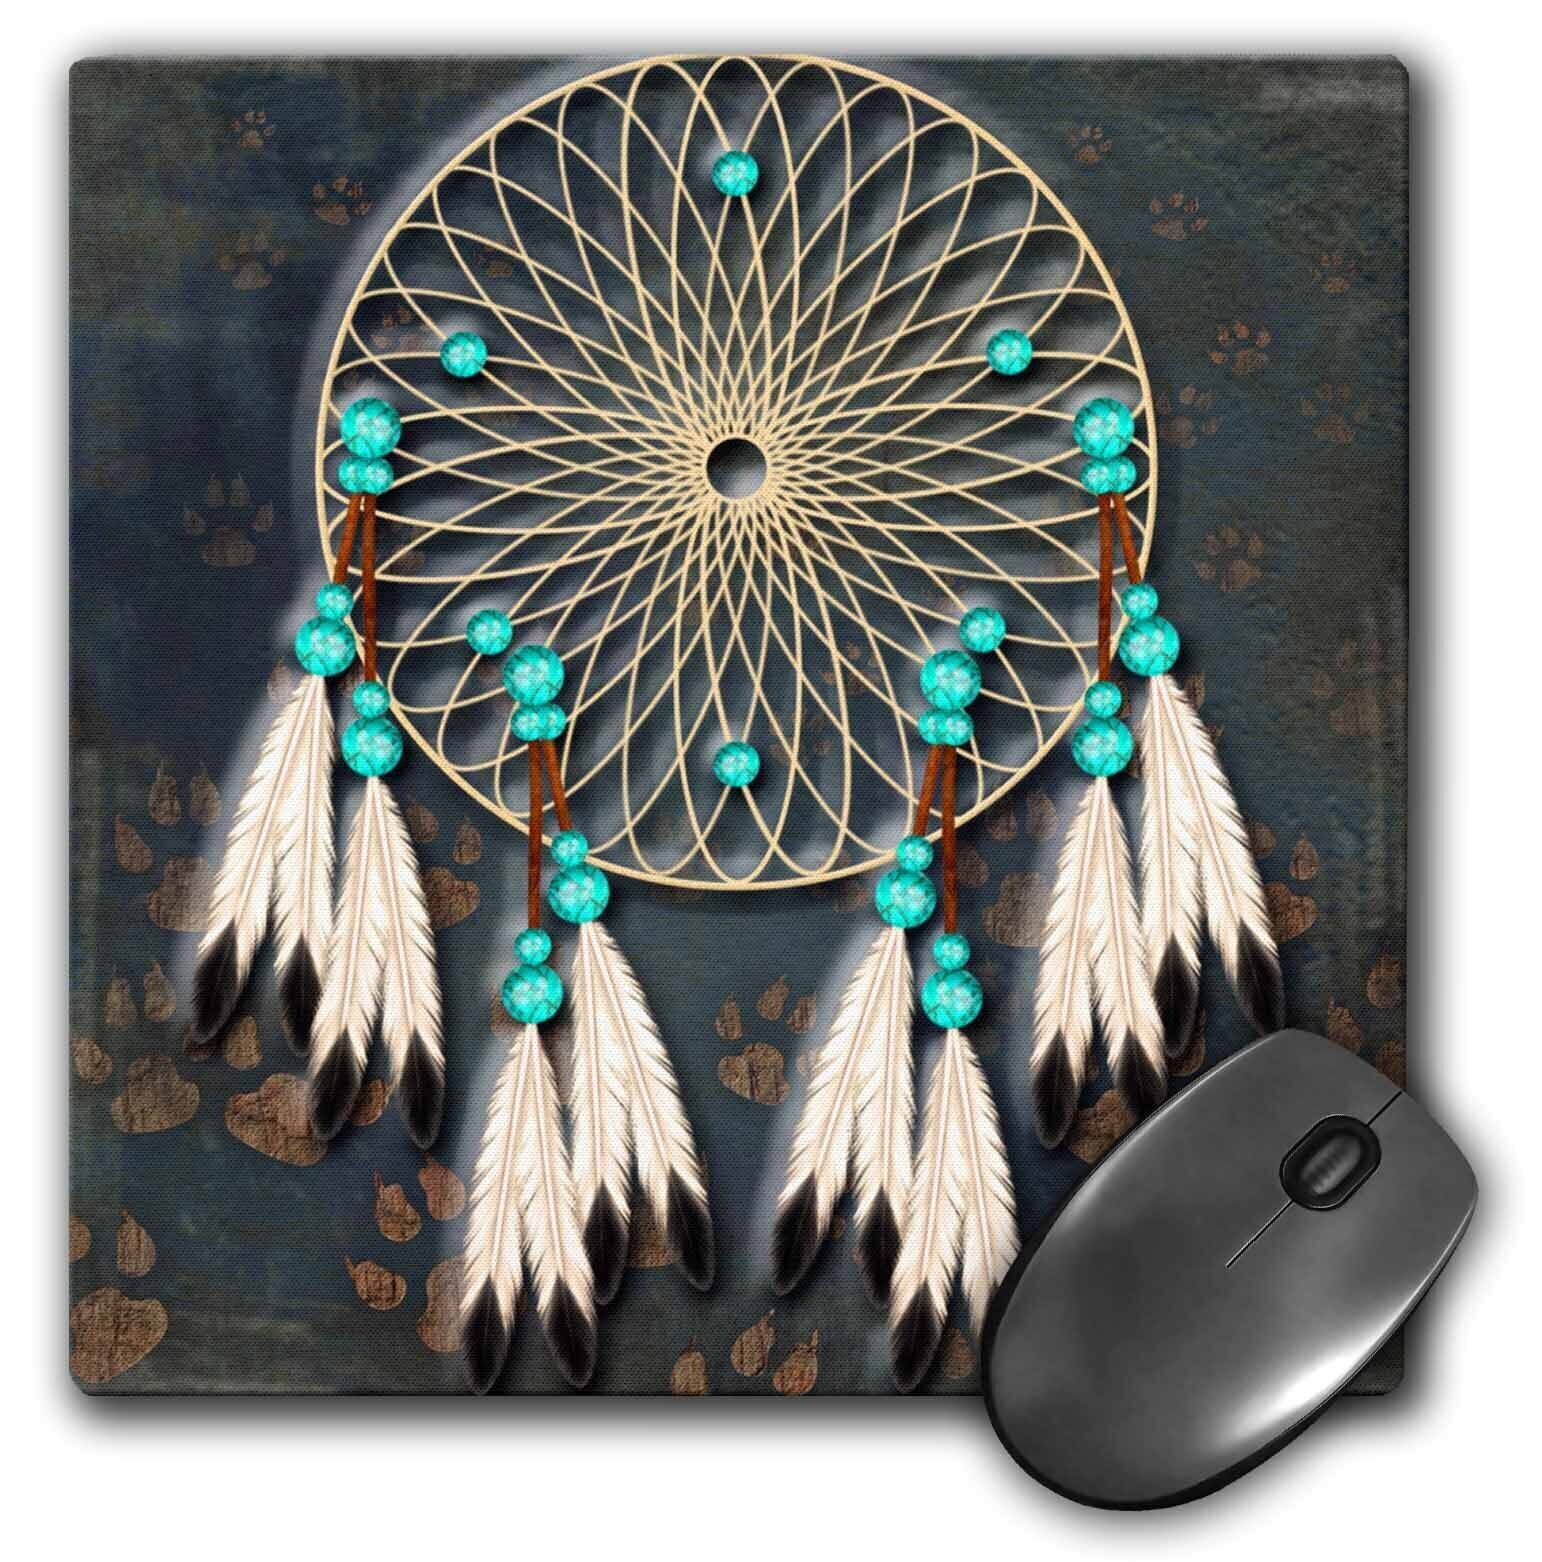 3dRose Designer One of A Kind Native American Art MousePad